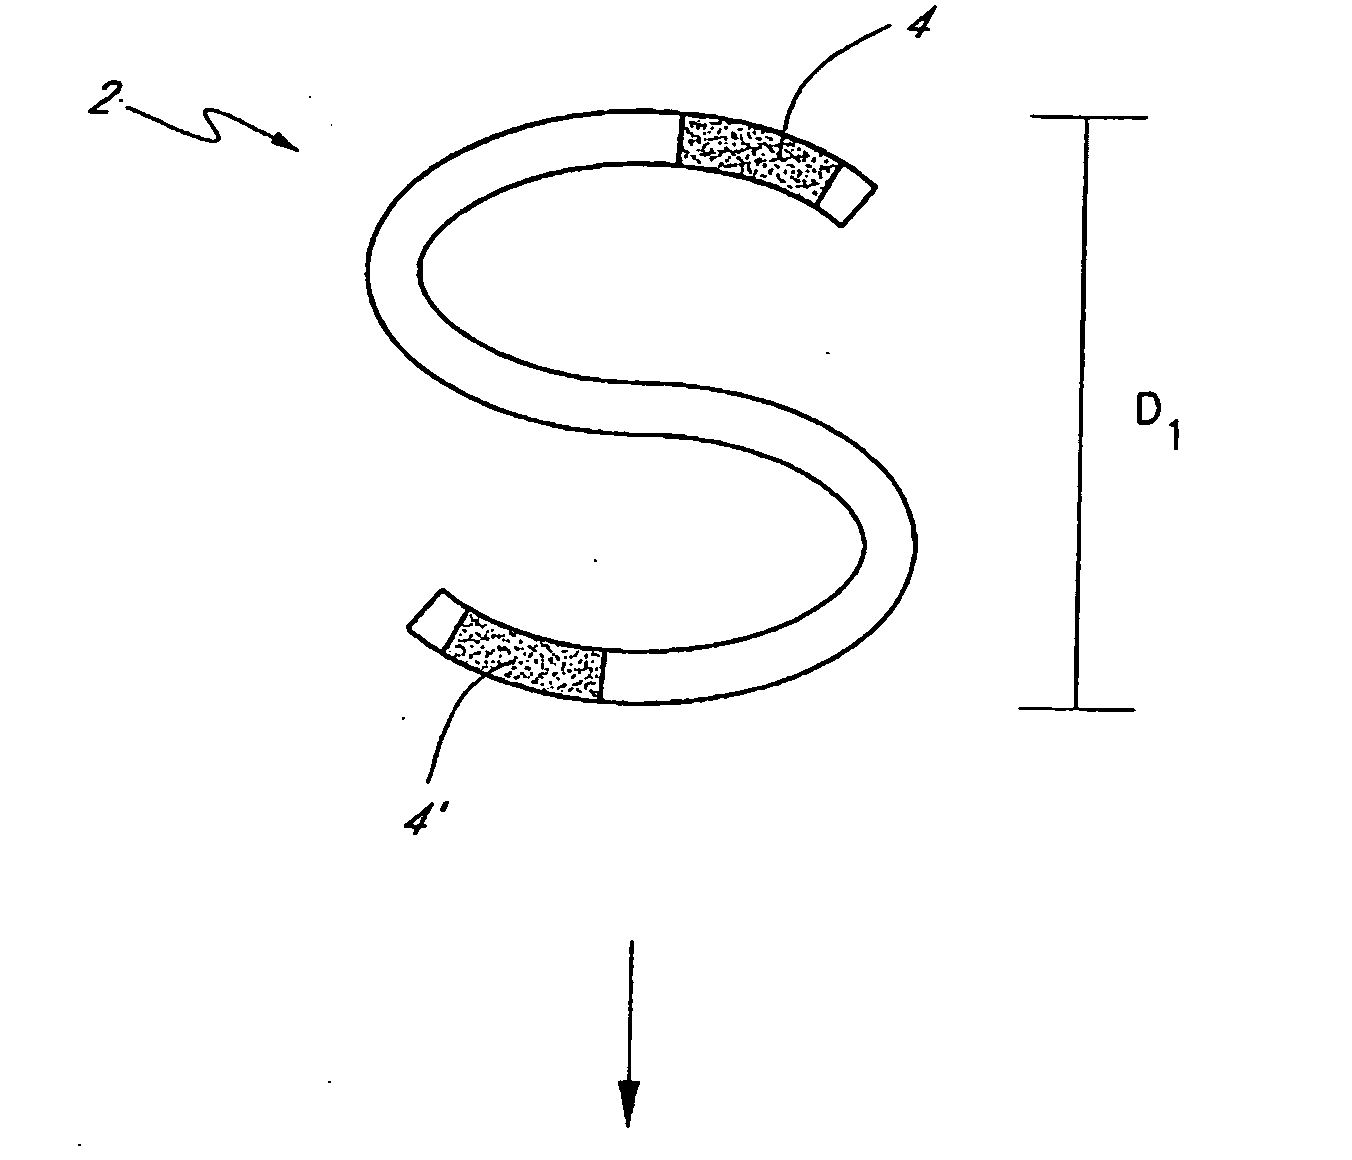 Adjustable embolic aneurysm coil